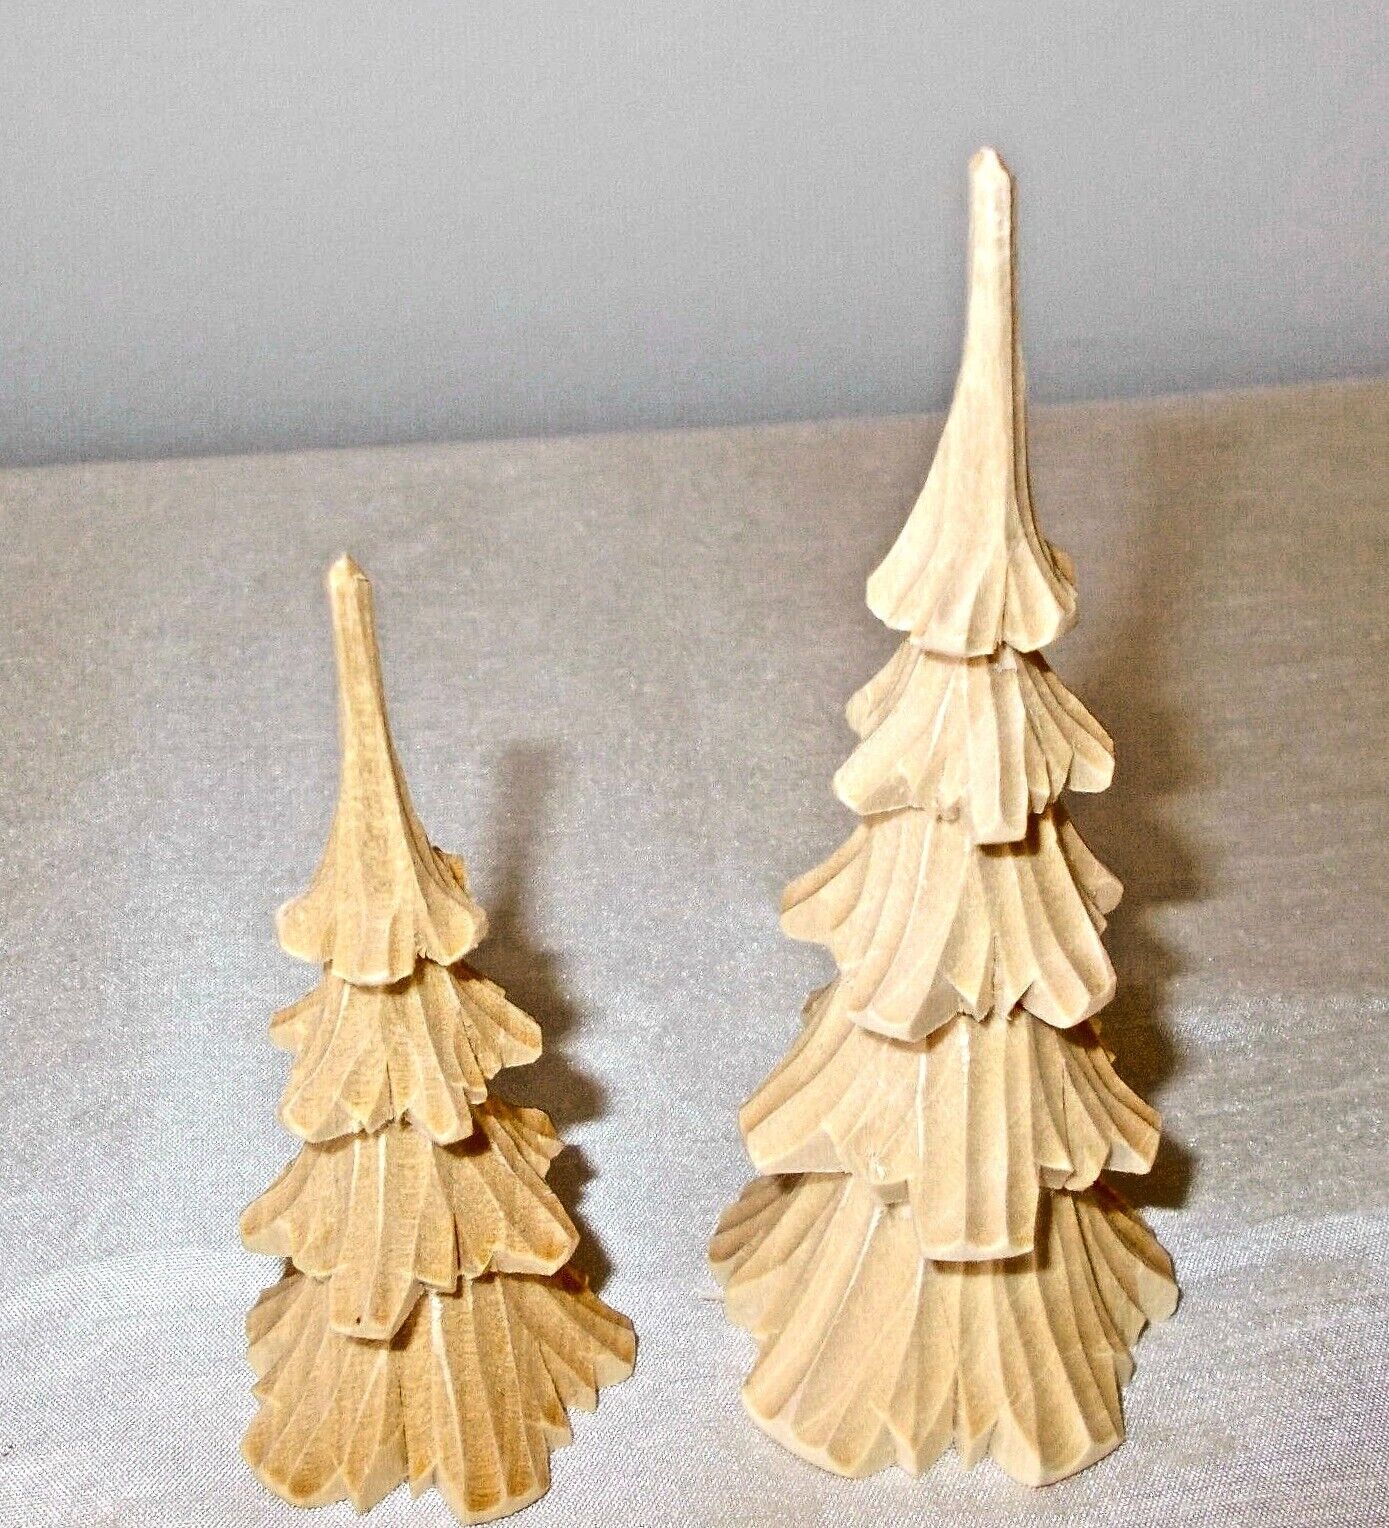 New Erzgebirge Miniatures: 2 Wood Carved Evergreen Trees by HOLZKUNST NESTLER